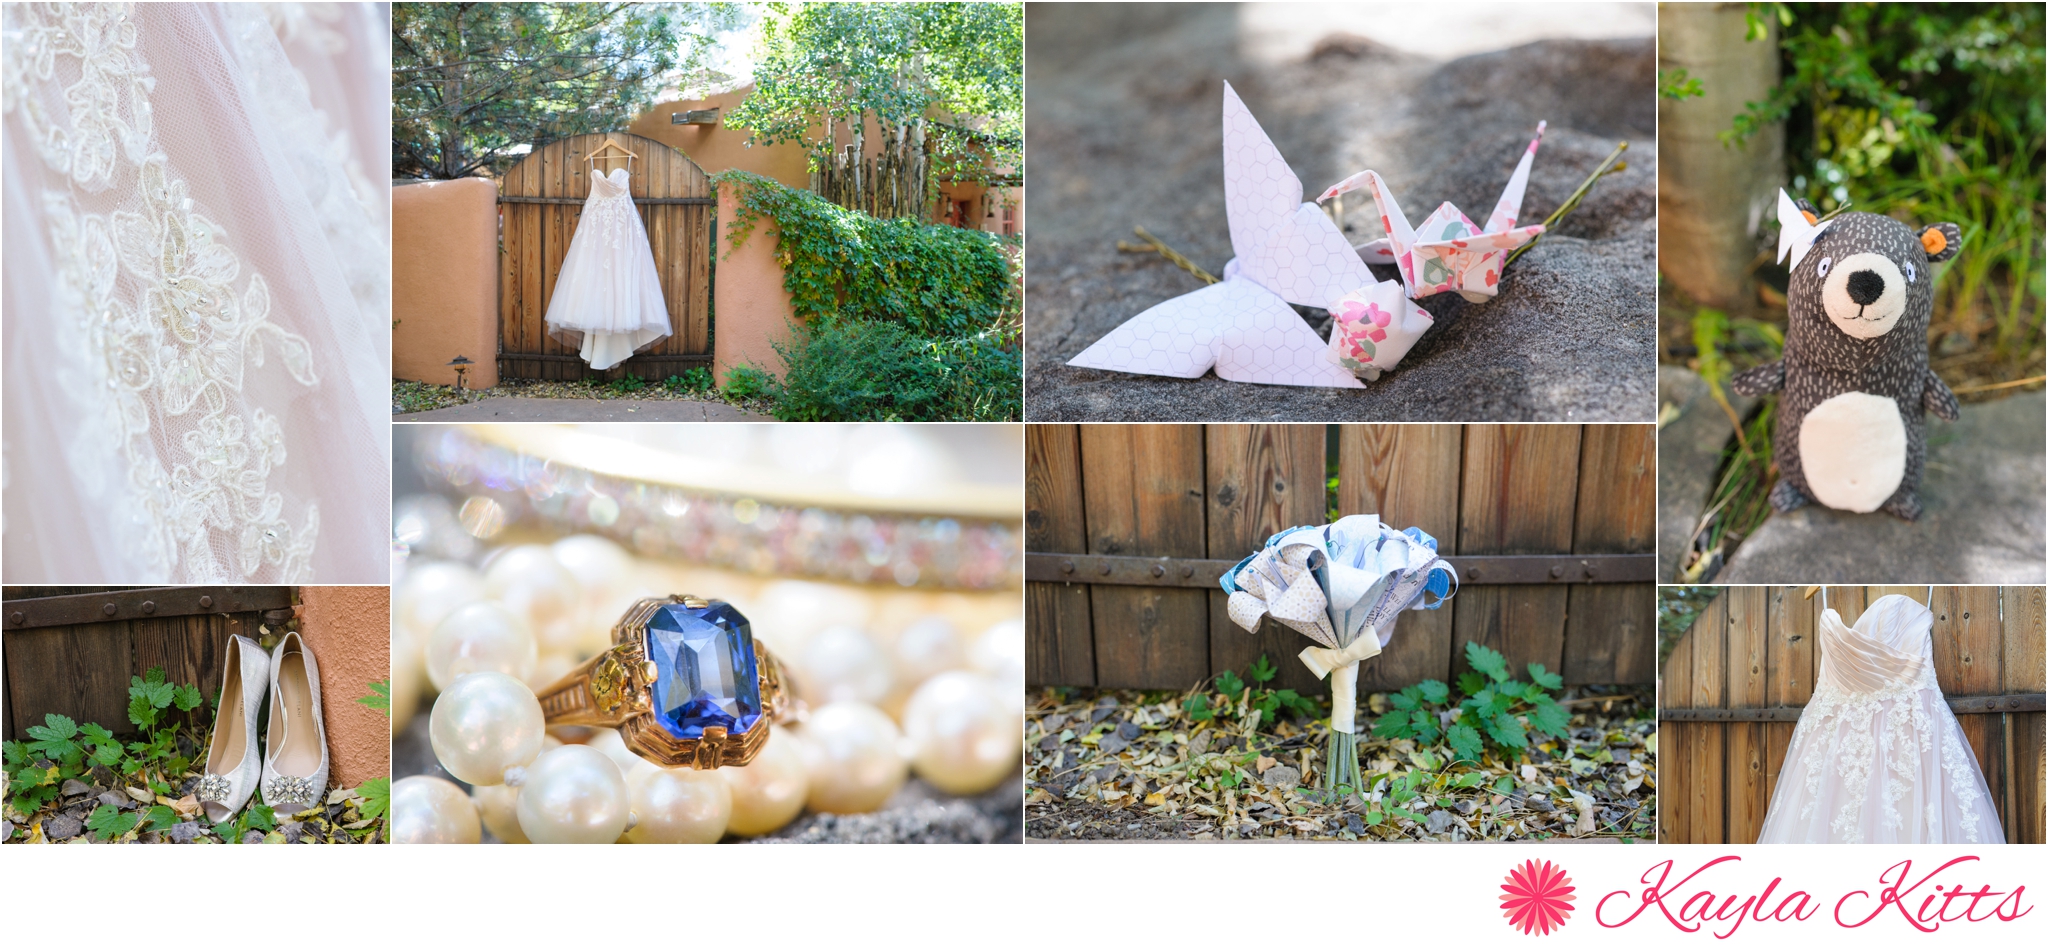 albuquerque wedding photographer - taos wedding - el monte sagrado wedding - new mexico wedding - alfred angelo dress - origami favors